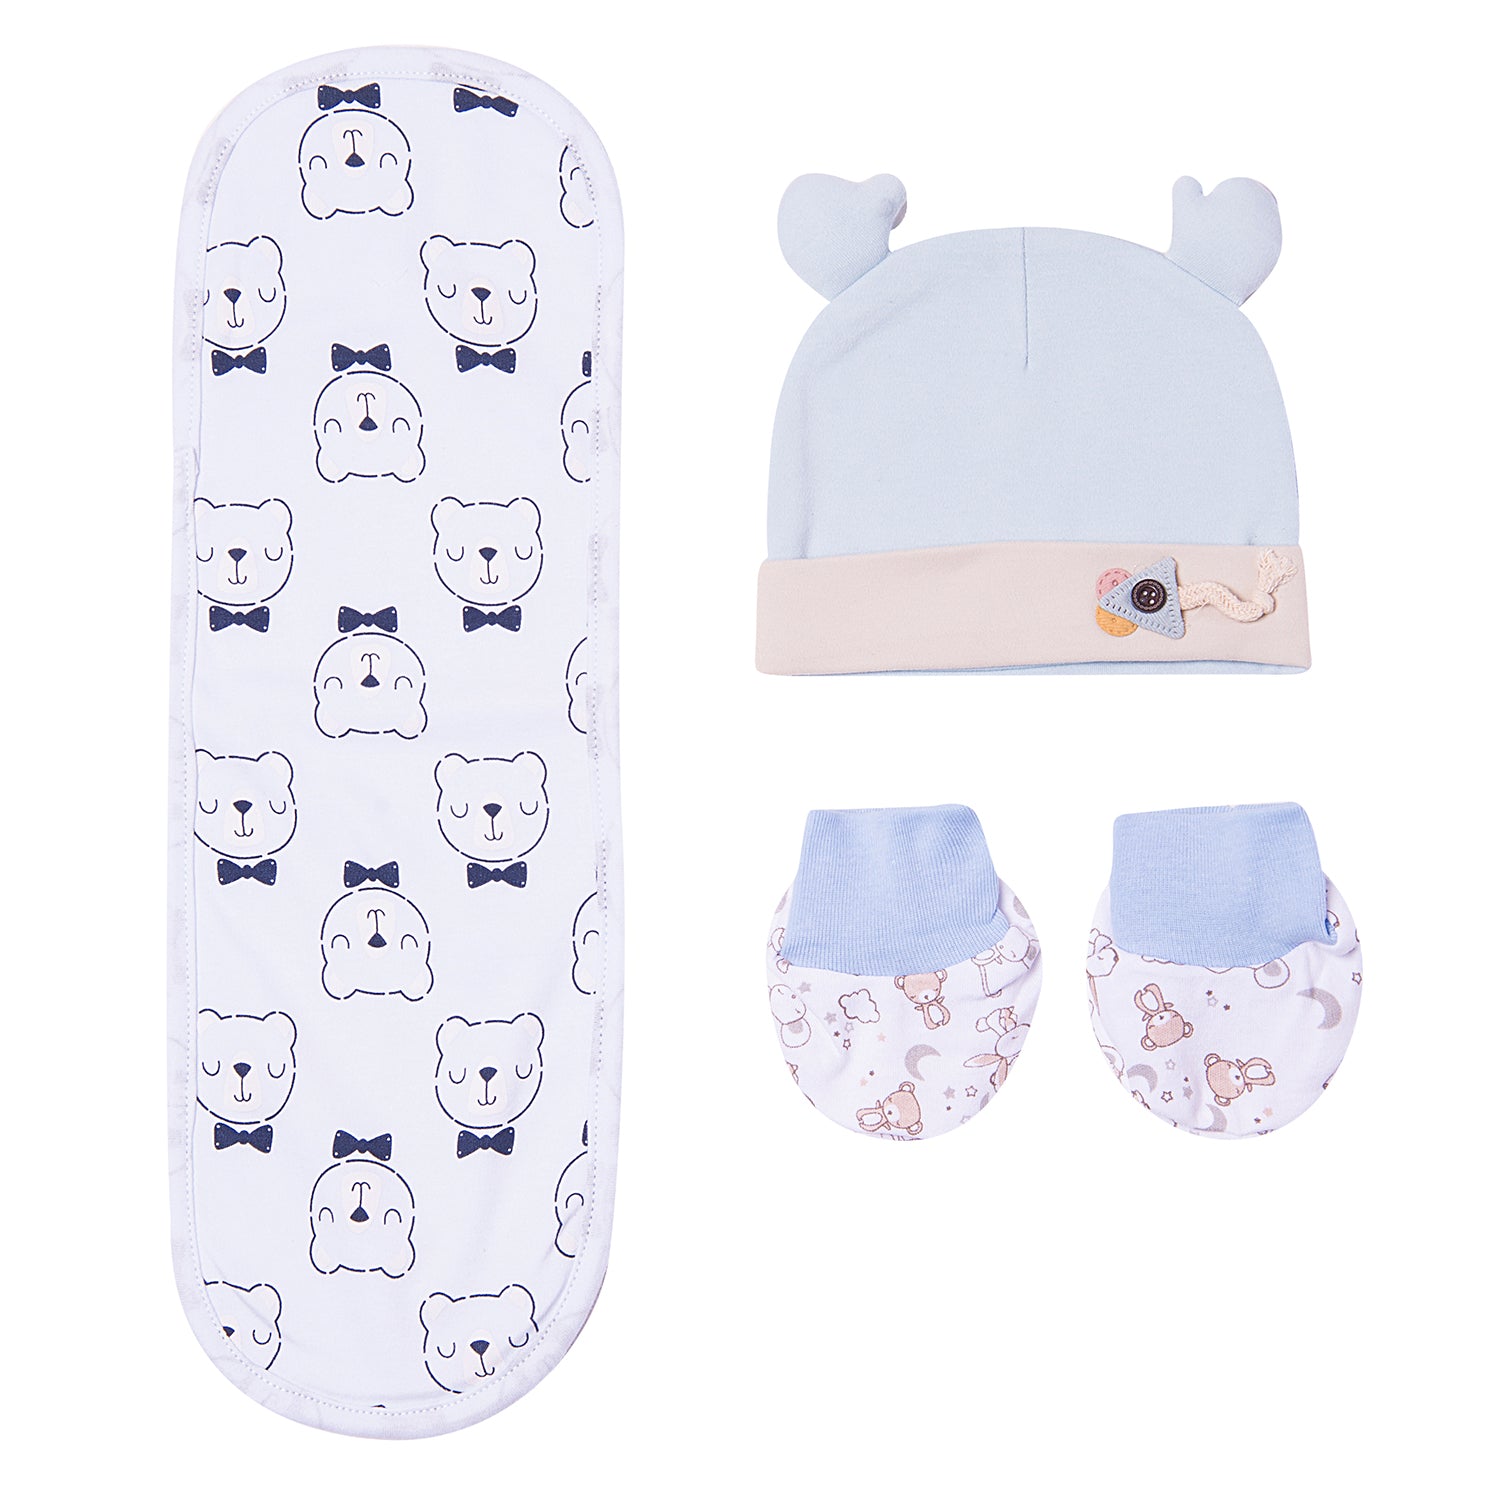 Premium Teddy Unisex Gift Hamper 0-18 M - Baby Moo